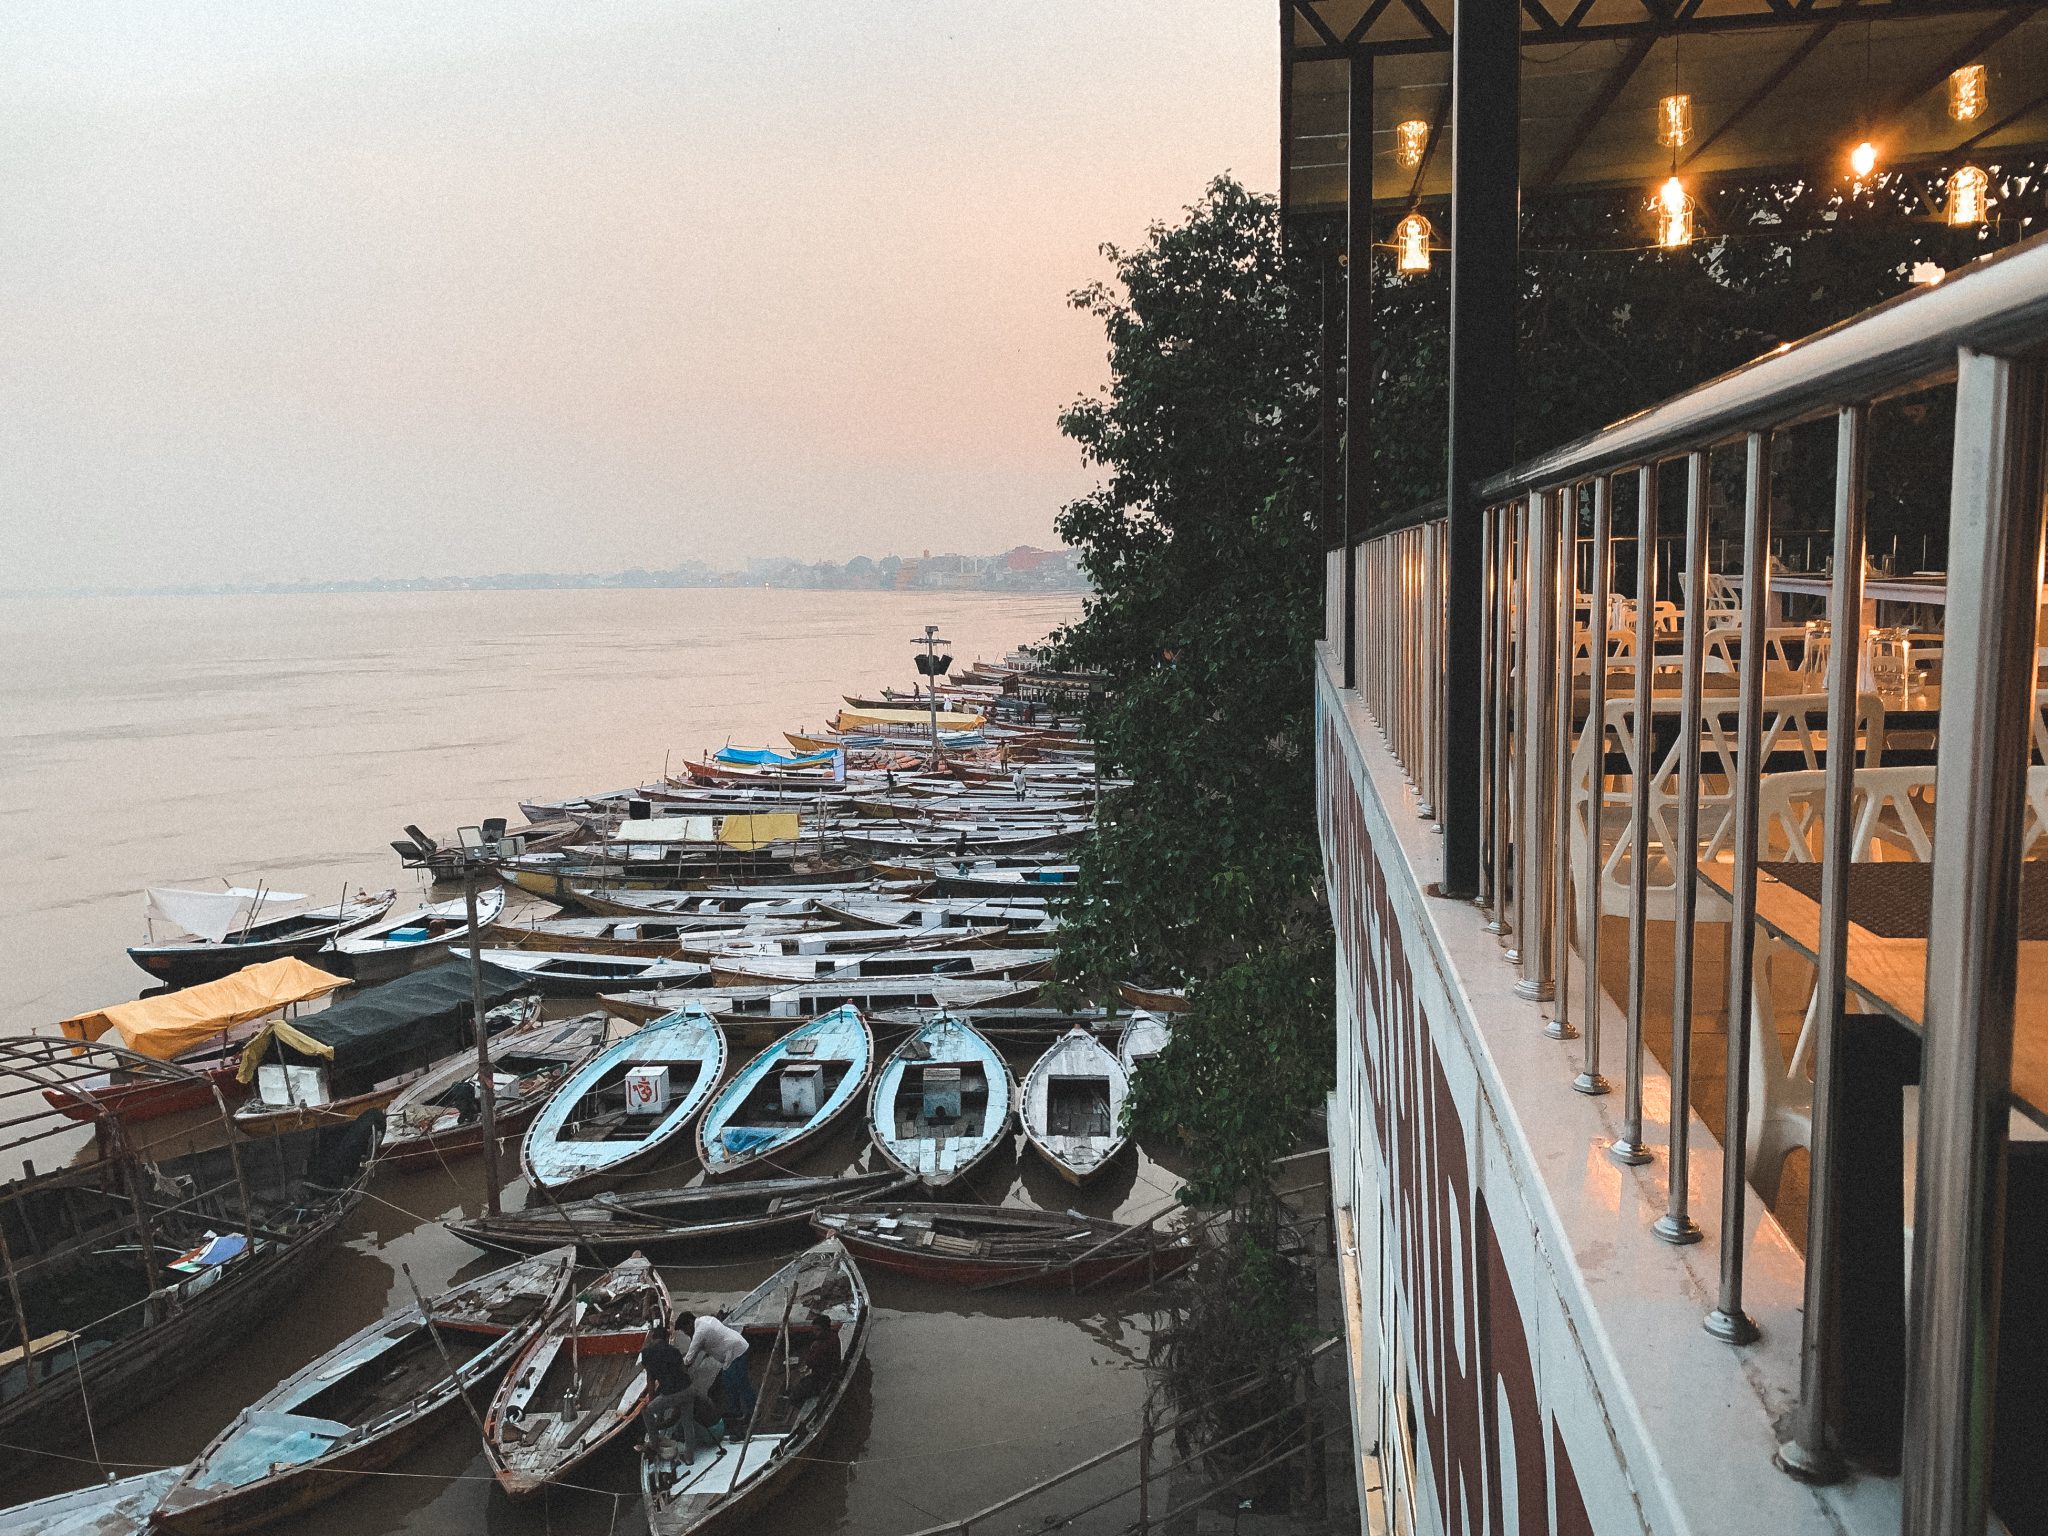 Ganga, India